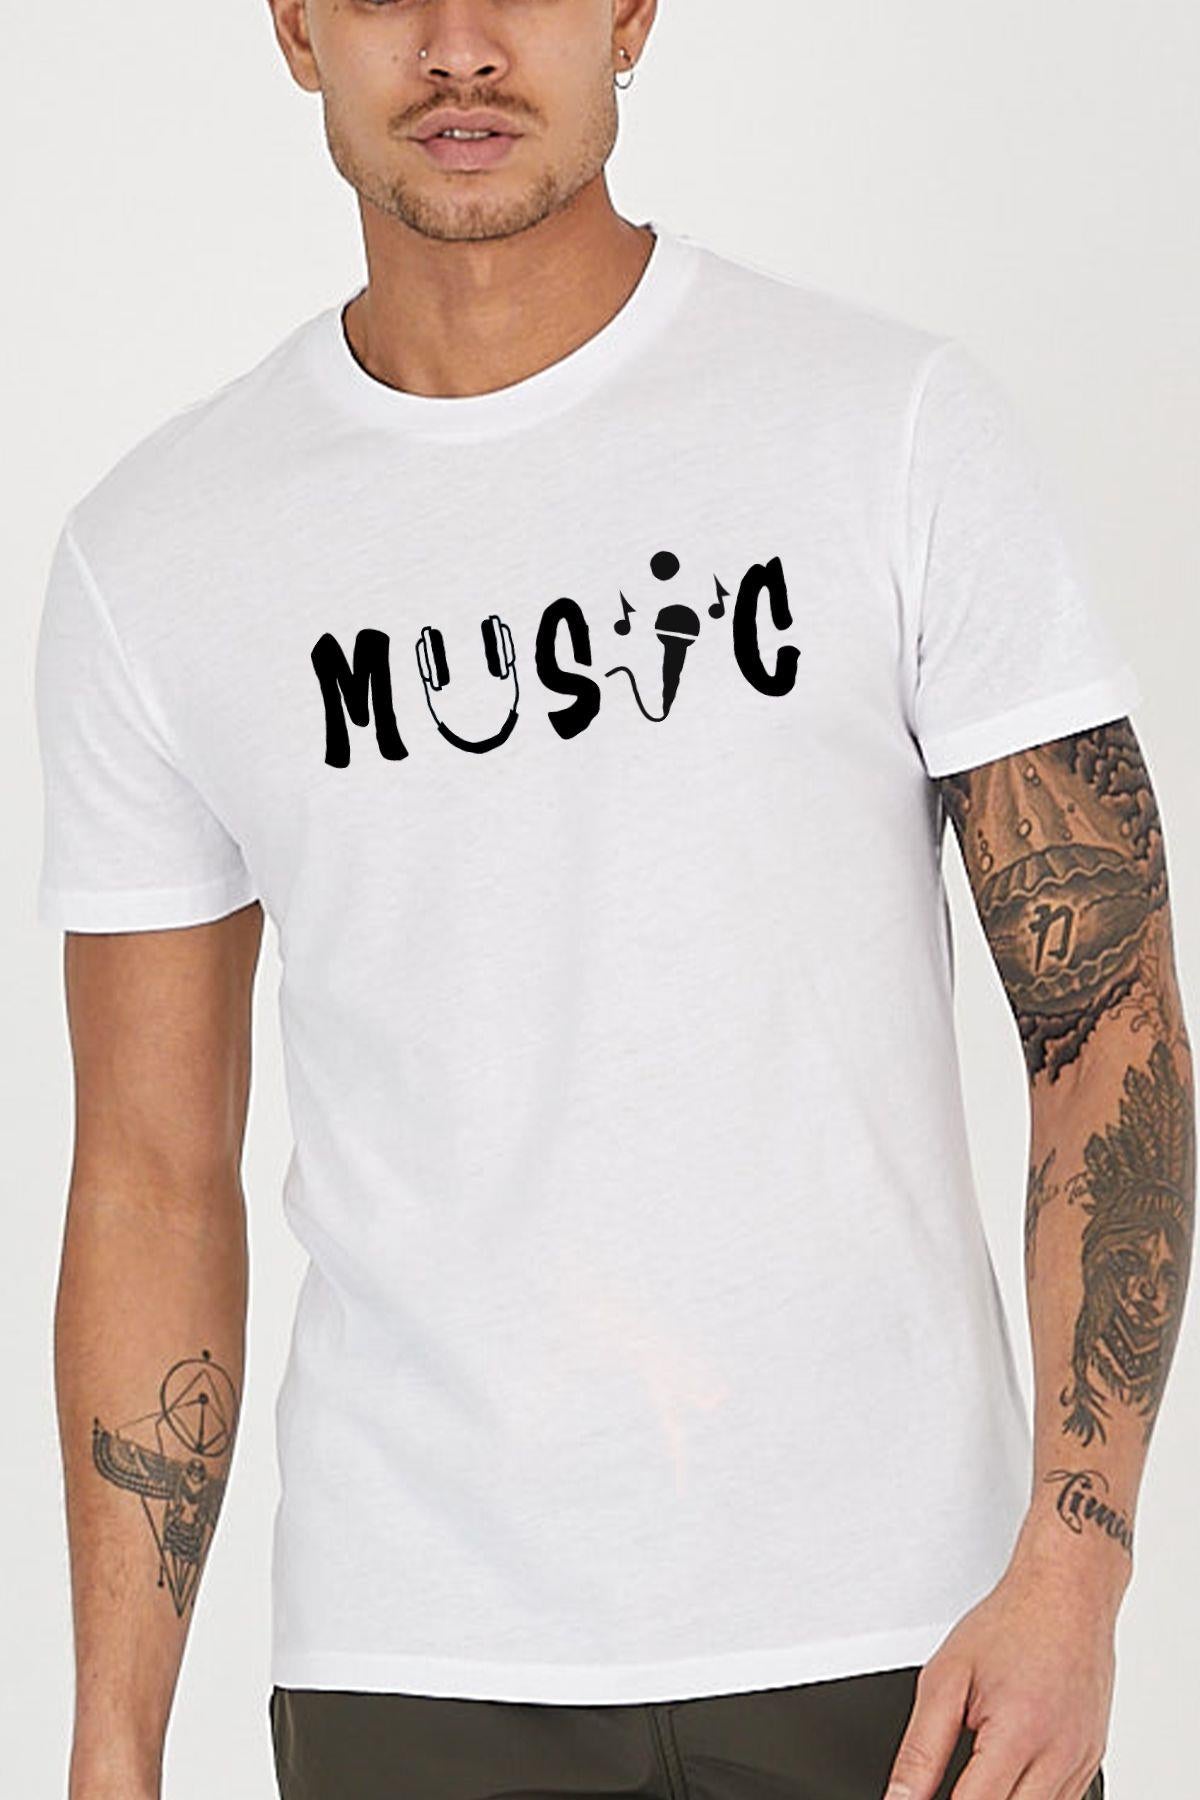 Music printed Crew Neck men's t -shirt